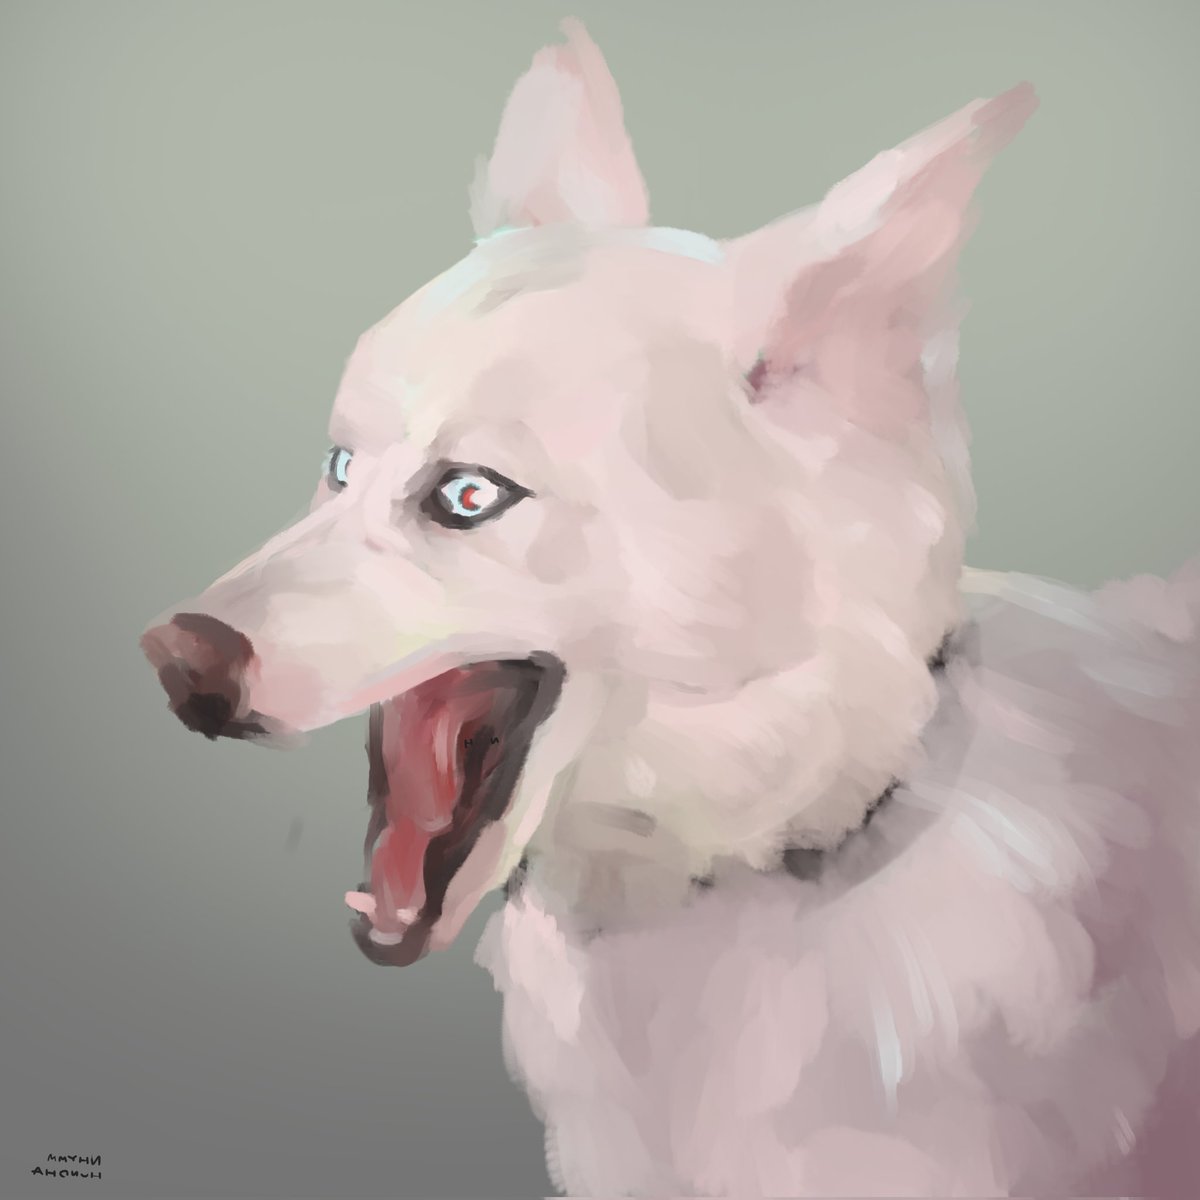 Practice bc art block 🍫🐕

#sketch #Sketching #dog #screamingdog #artshare #artist #husky #art #dog #screamingdog #creature #ArtistOnTwitter